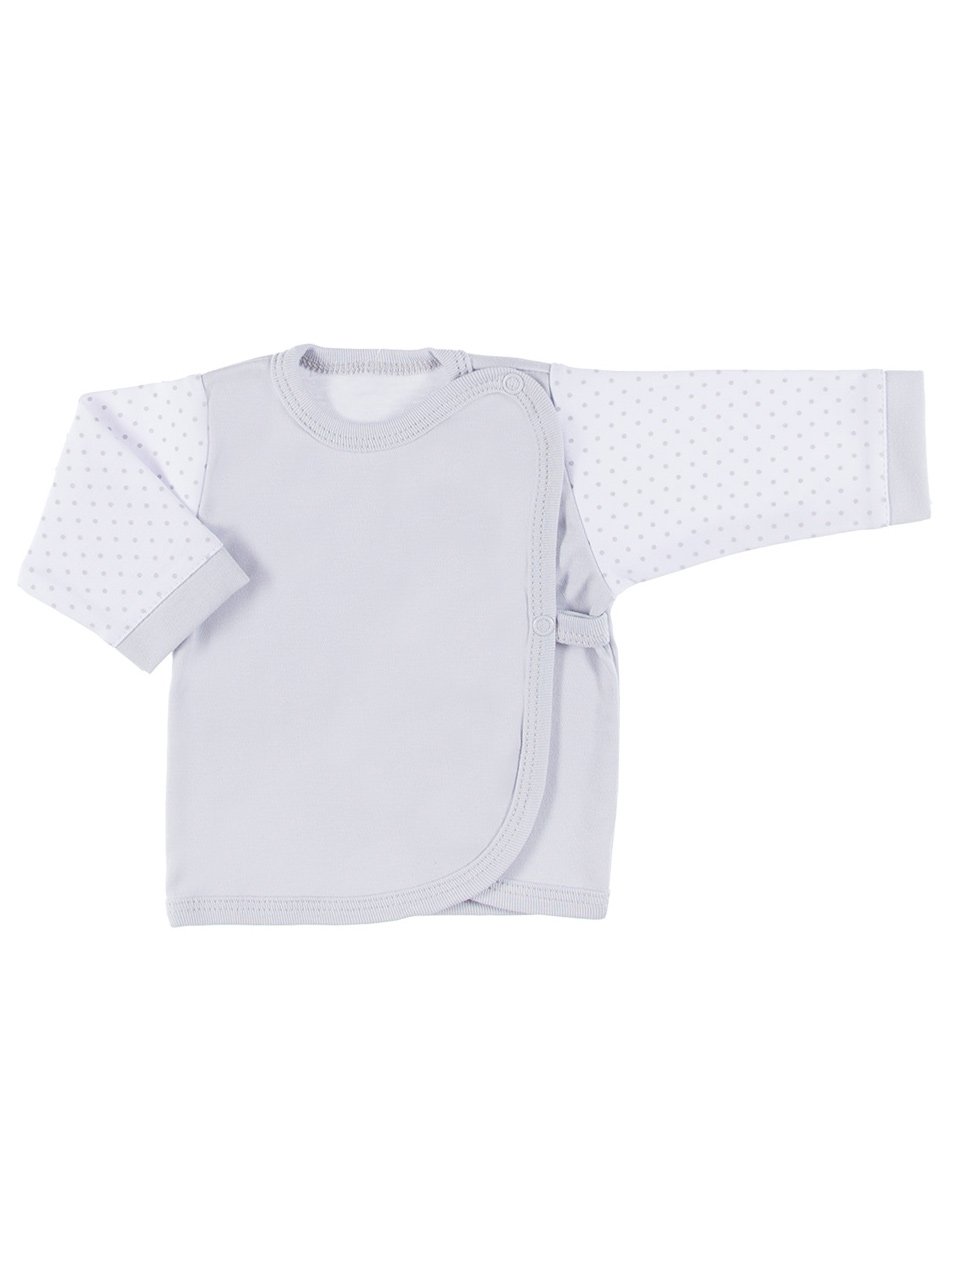 Early Baby Wraparound Top, Grey - Top / T-shirt - EEVI